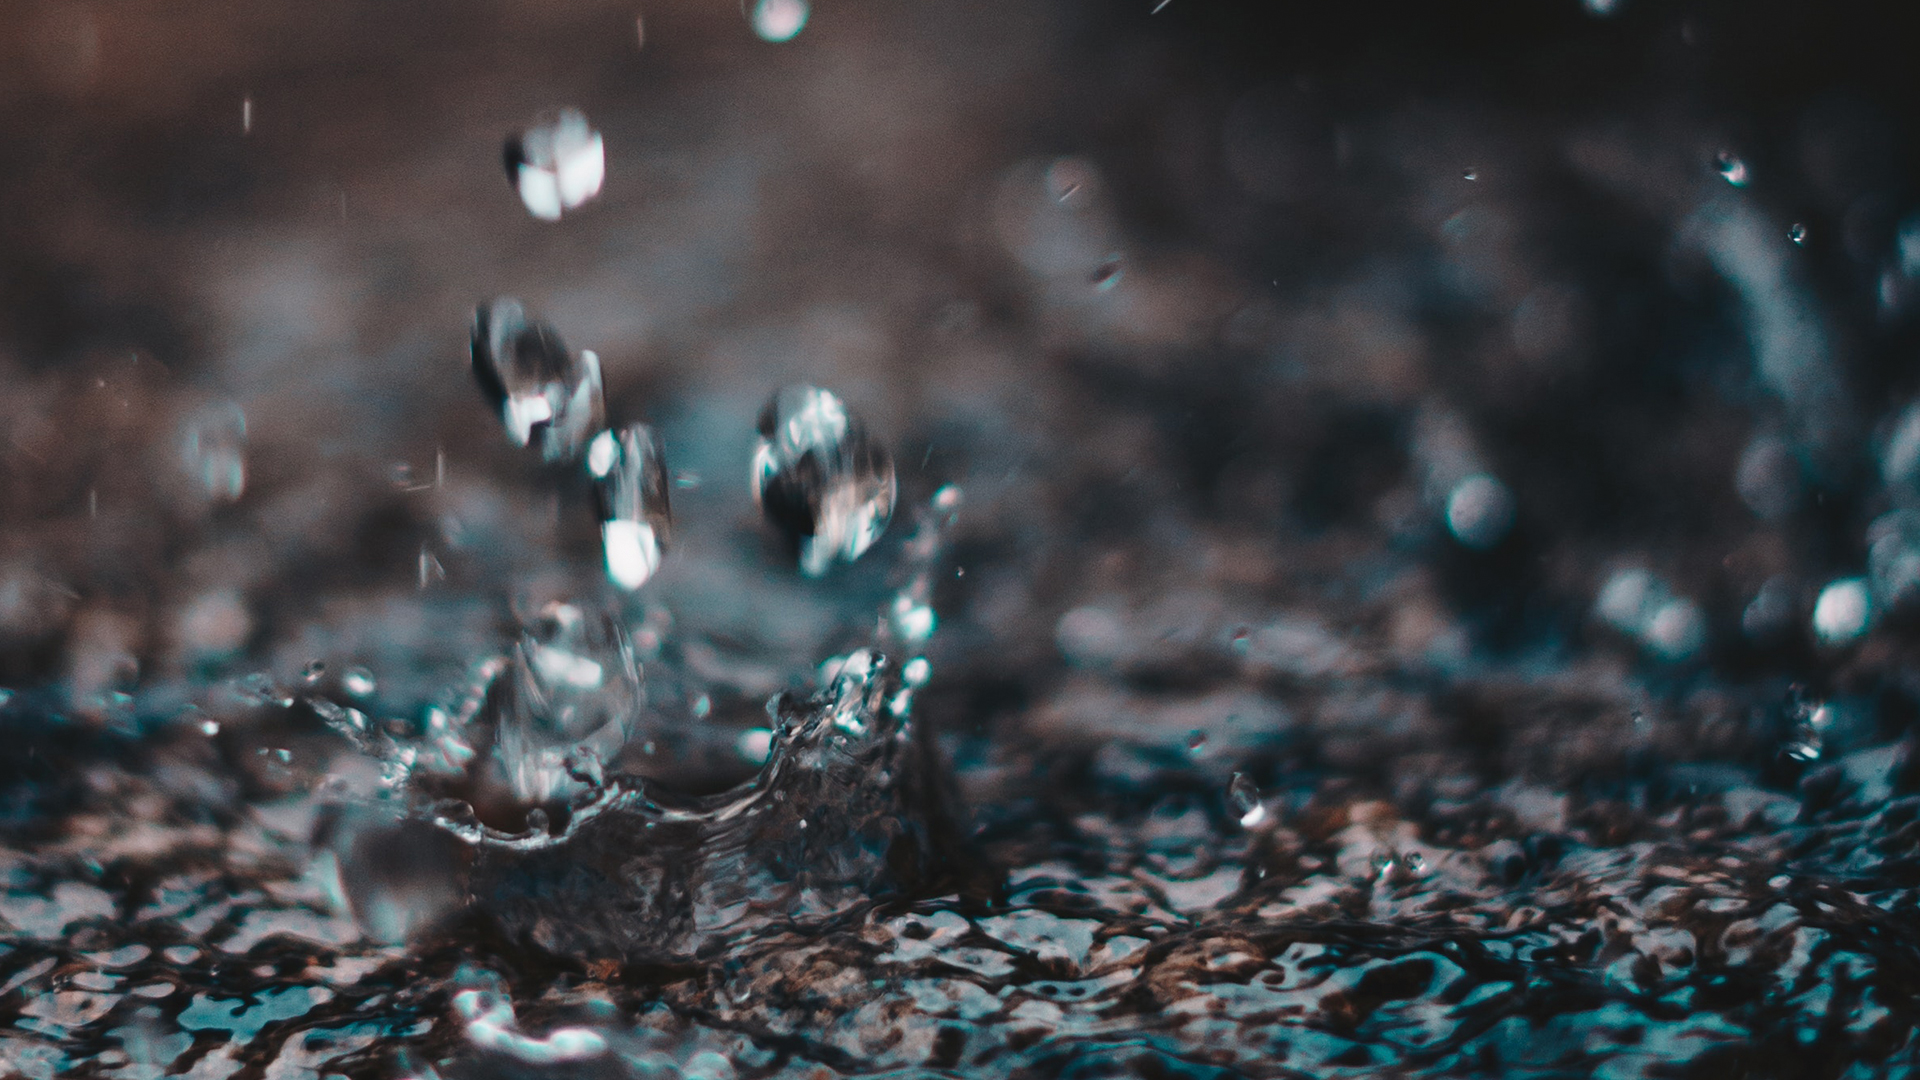 water droplets making a splash